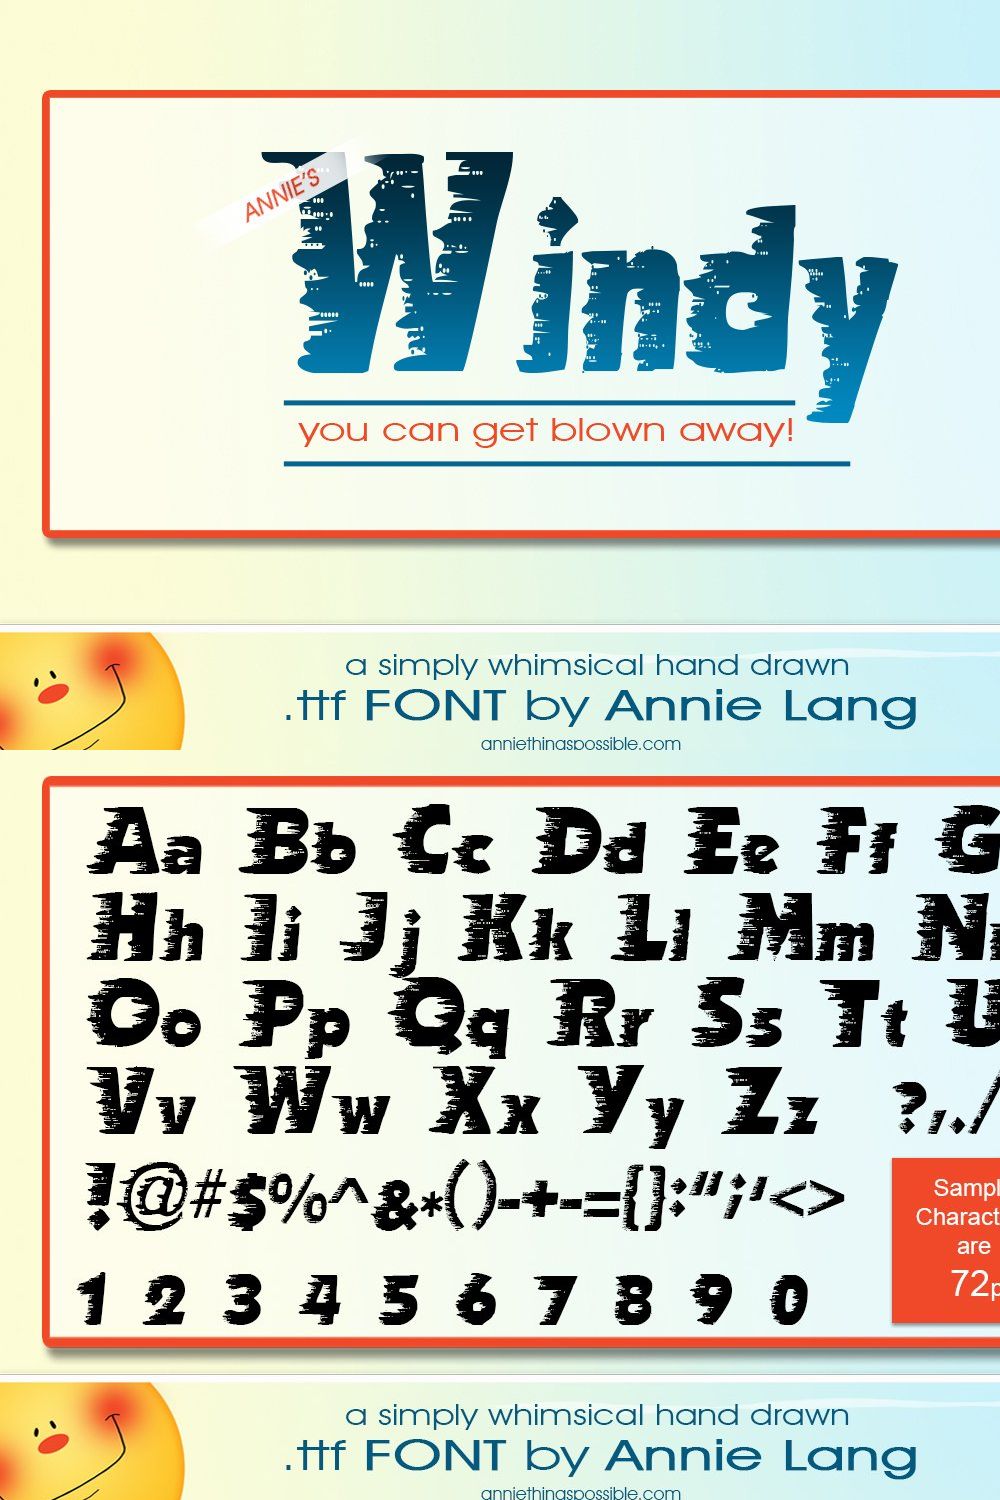 Annie's Windy Font pinterest preview image.